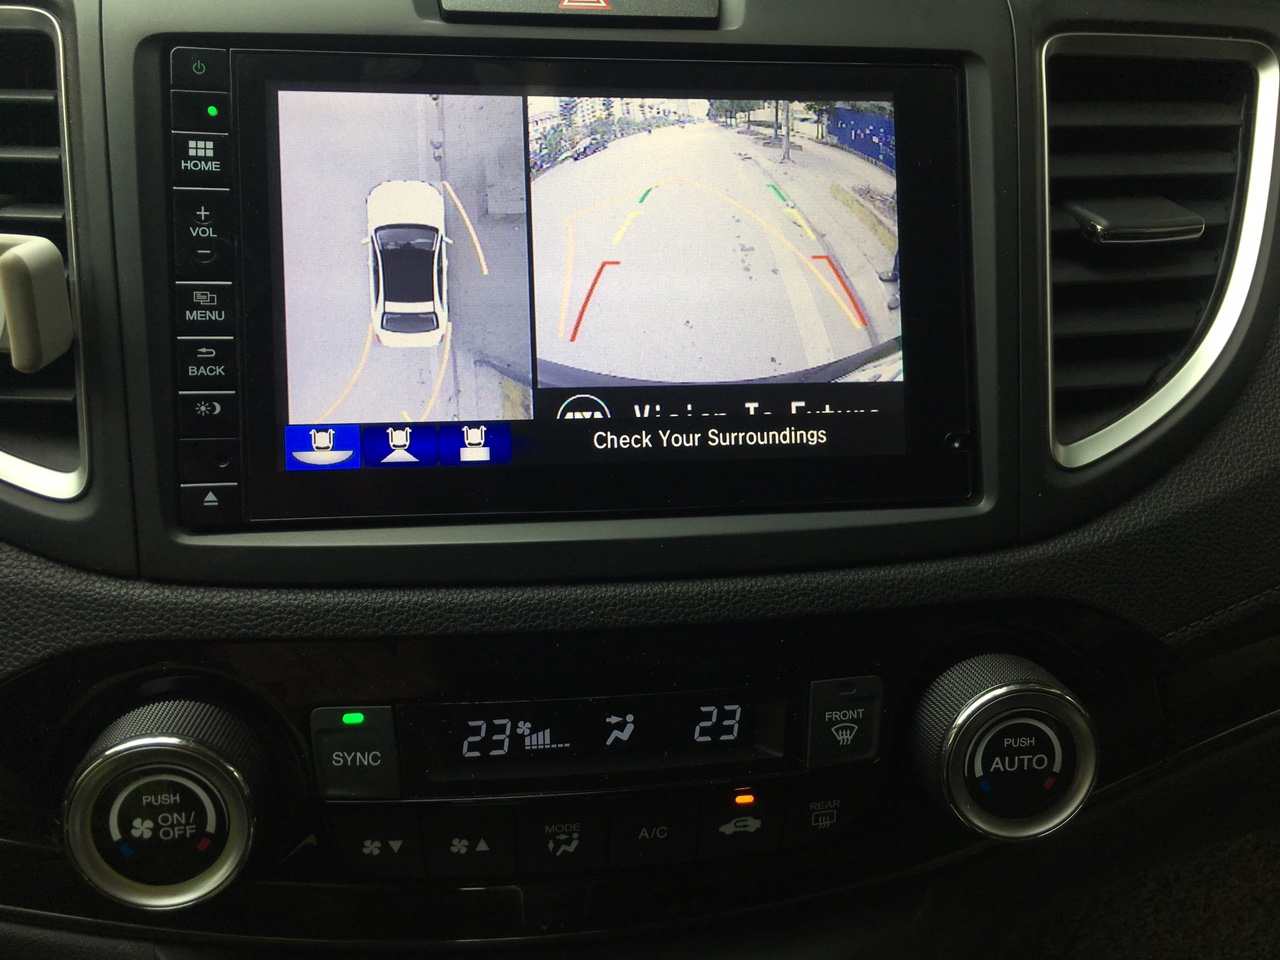 Camera 360 độ oris cho xe Honda Crv